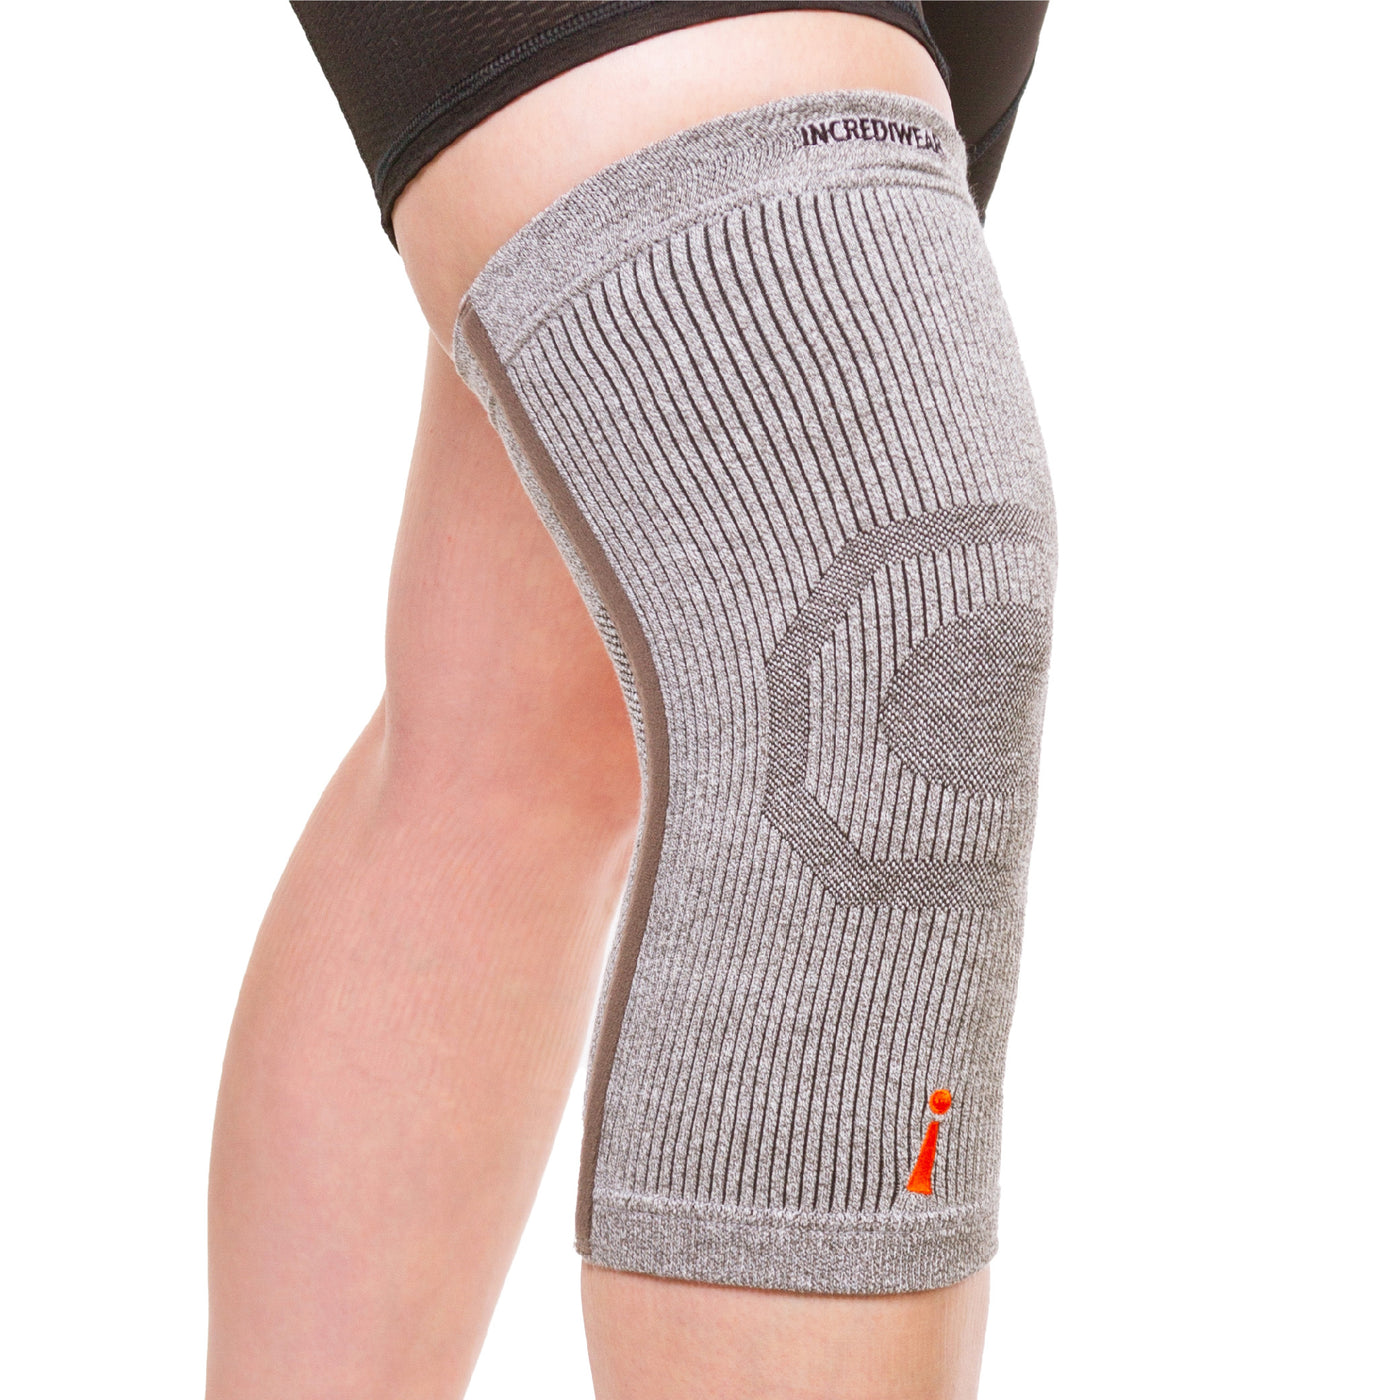 Incrediwear Knee Sleeve  Incredibrace Compression Athletic Brace